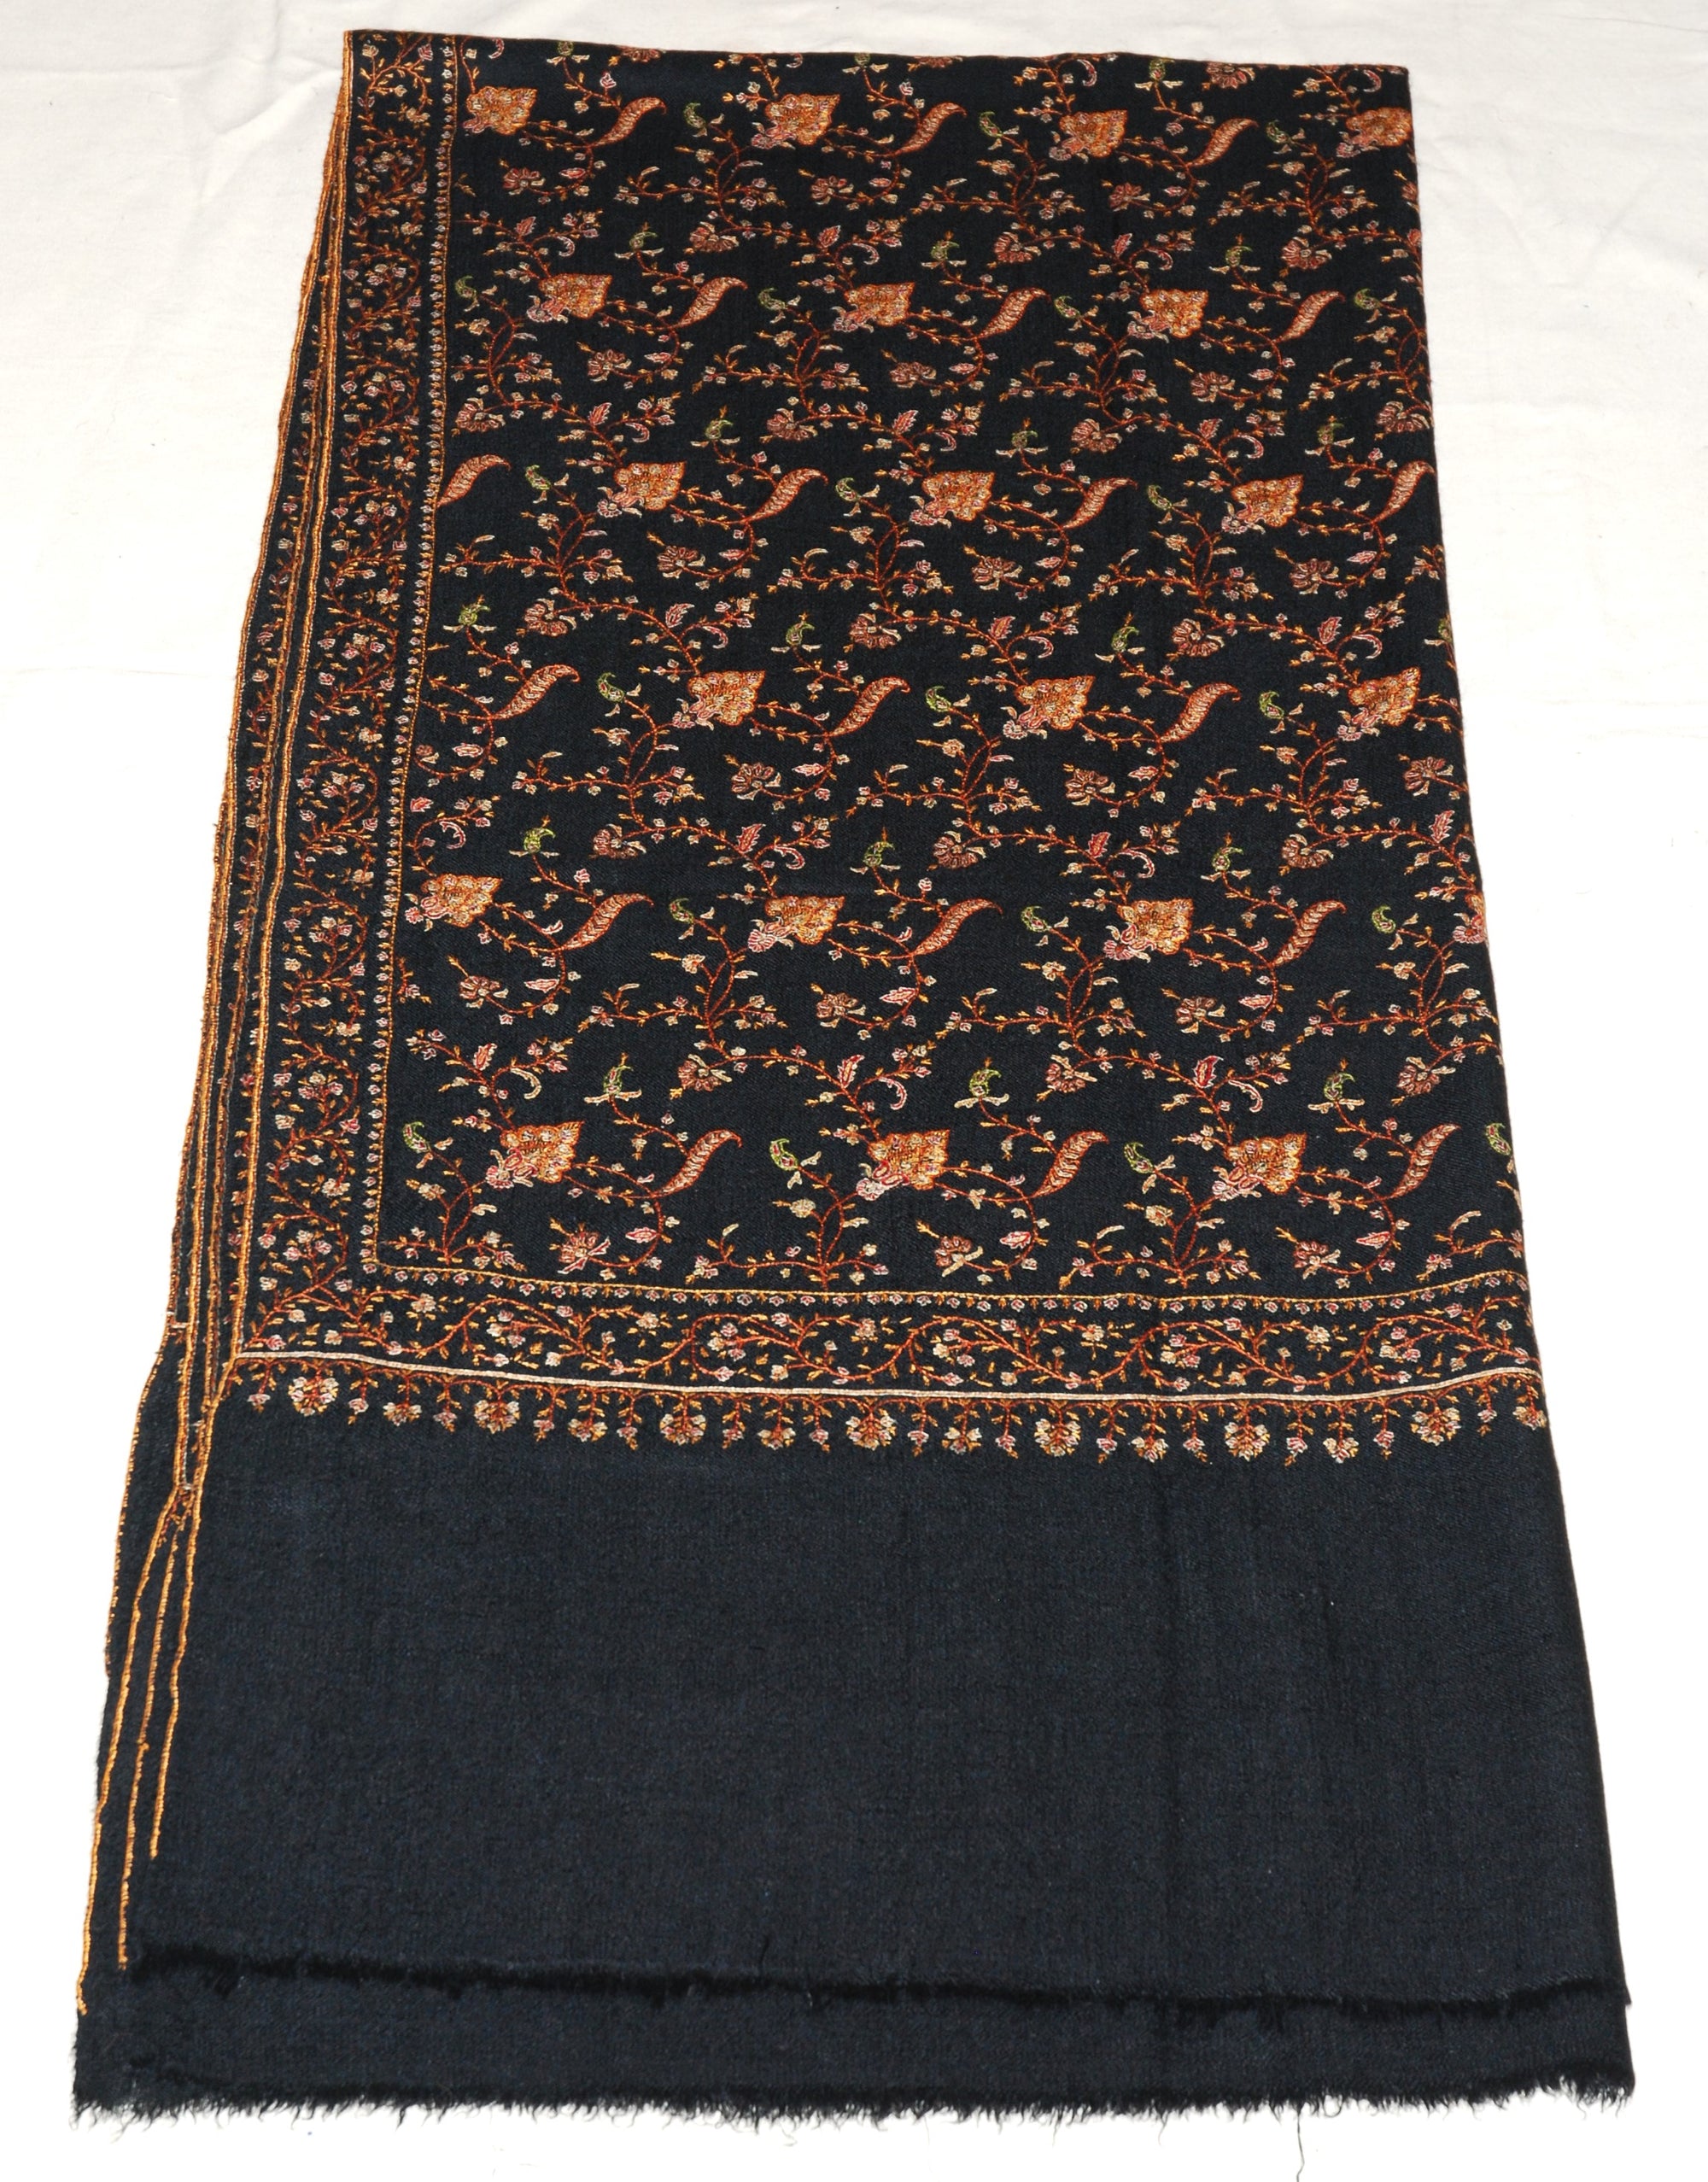 Kashmir Pashmina "Sozni" Needlework Embroidered "Cashmere" Shawl Black, Multicolor #PJL-002